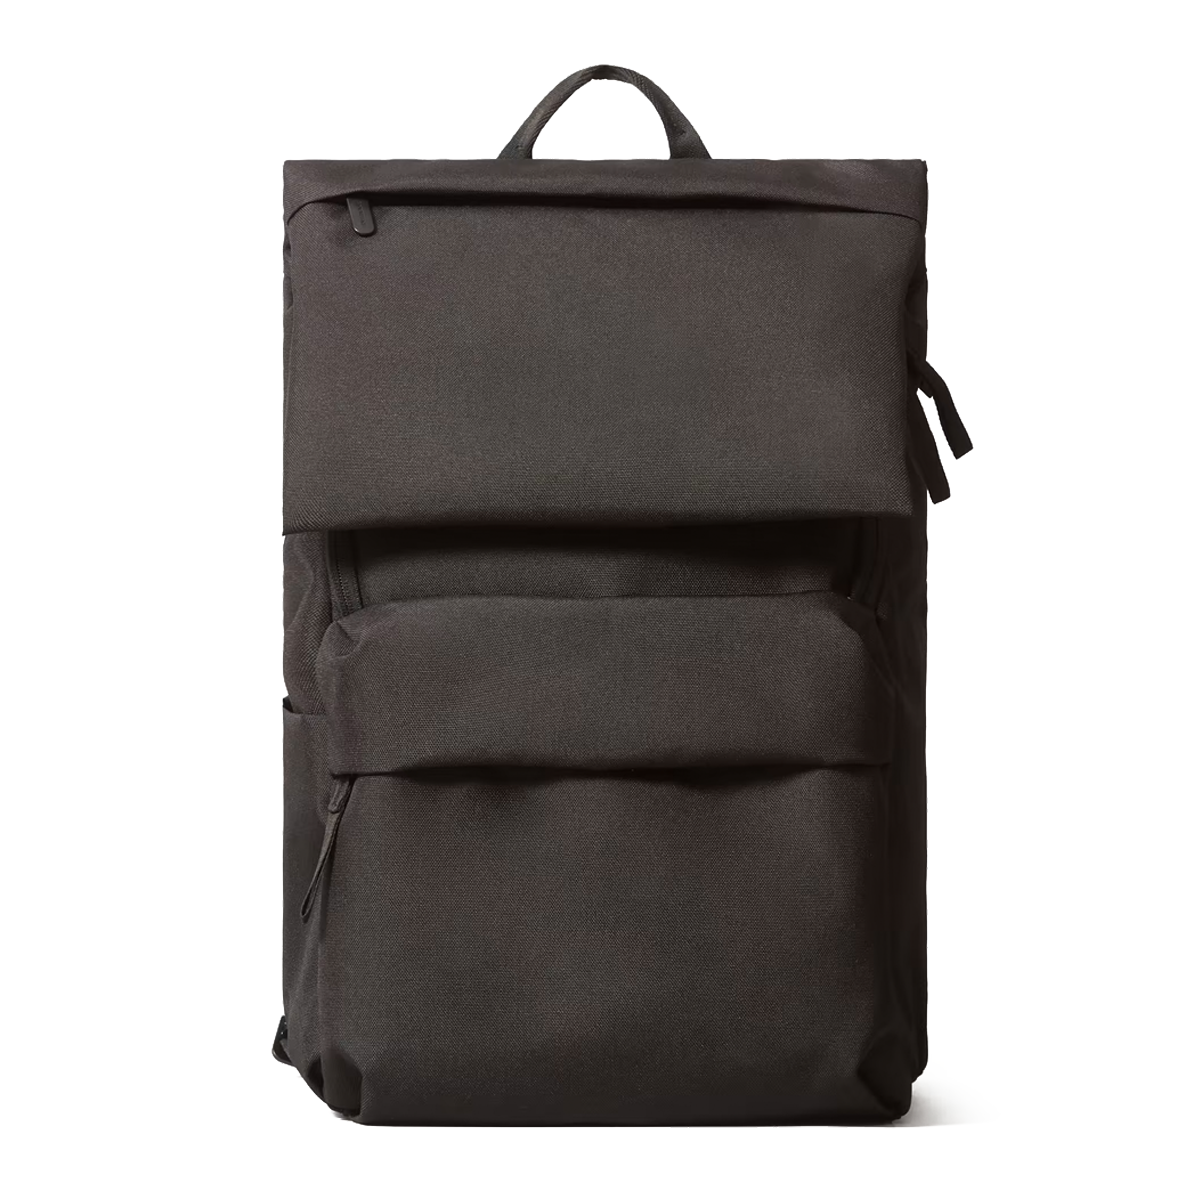 19 Best Laptop Backpacks for Women Who Commute in Style